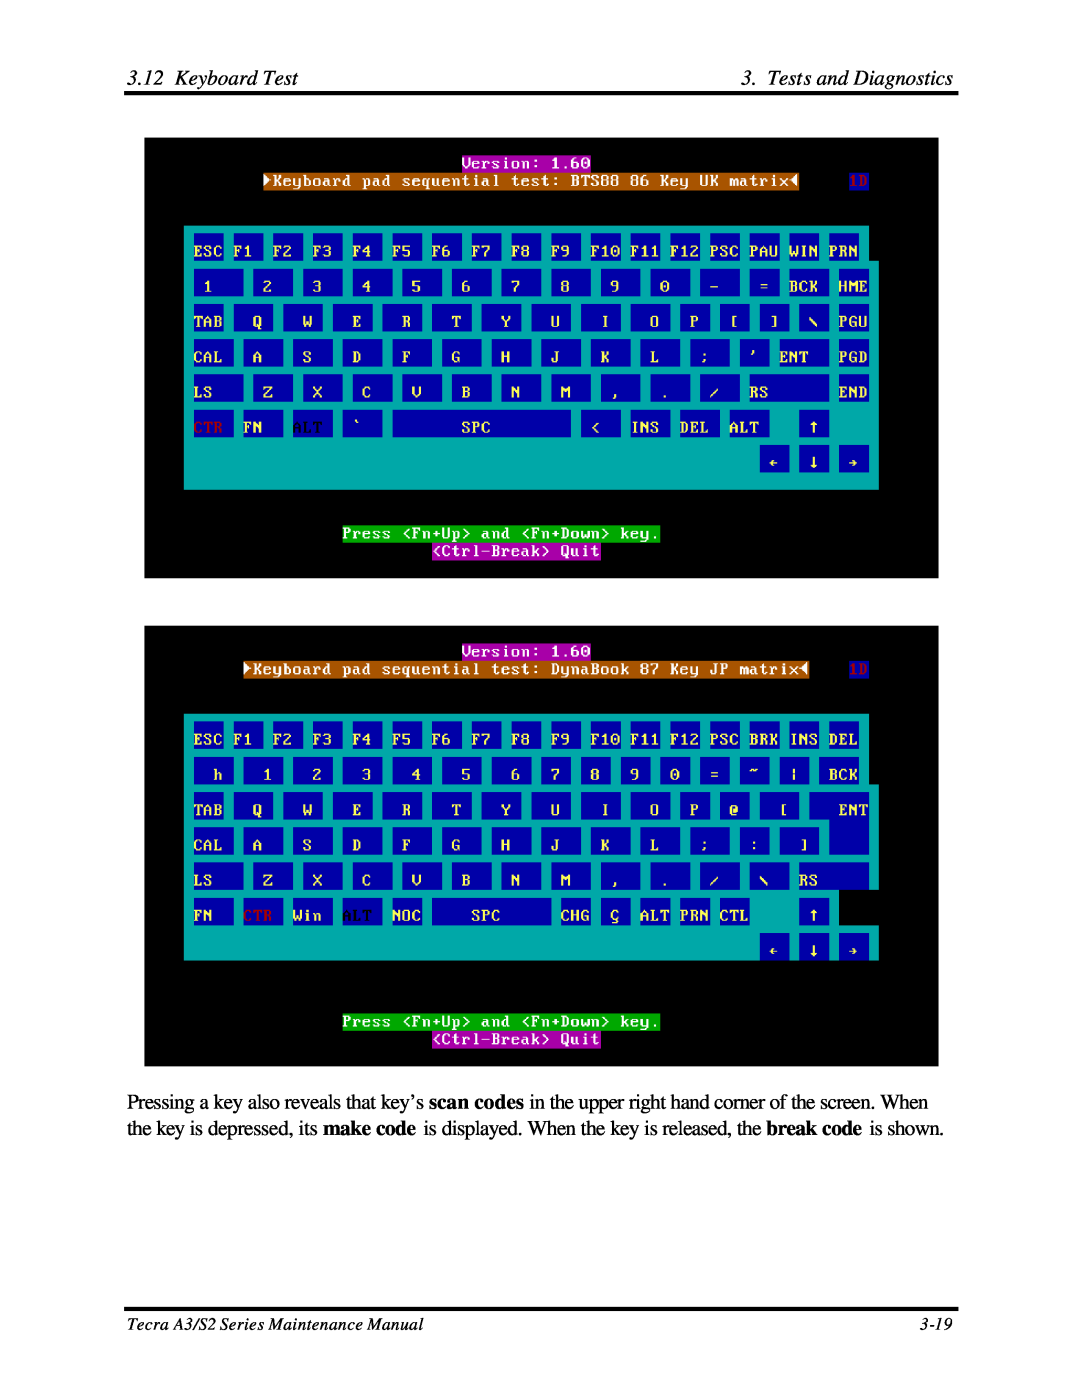 Toshiba manual Keyboard Test, Tests and Diagnostics, Tecra A3/S2 Series Maintenance Manual, 3-19 